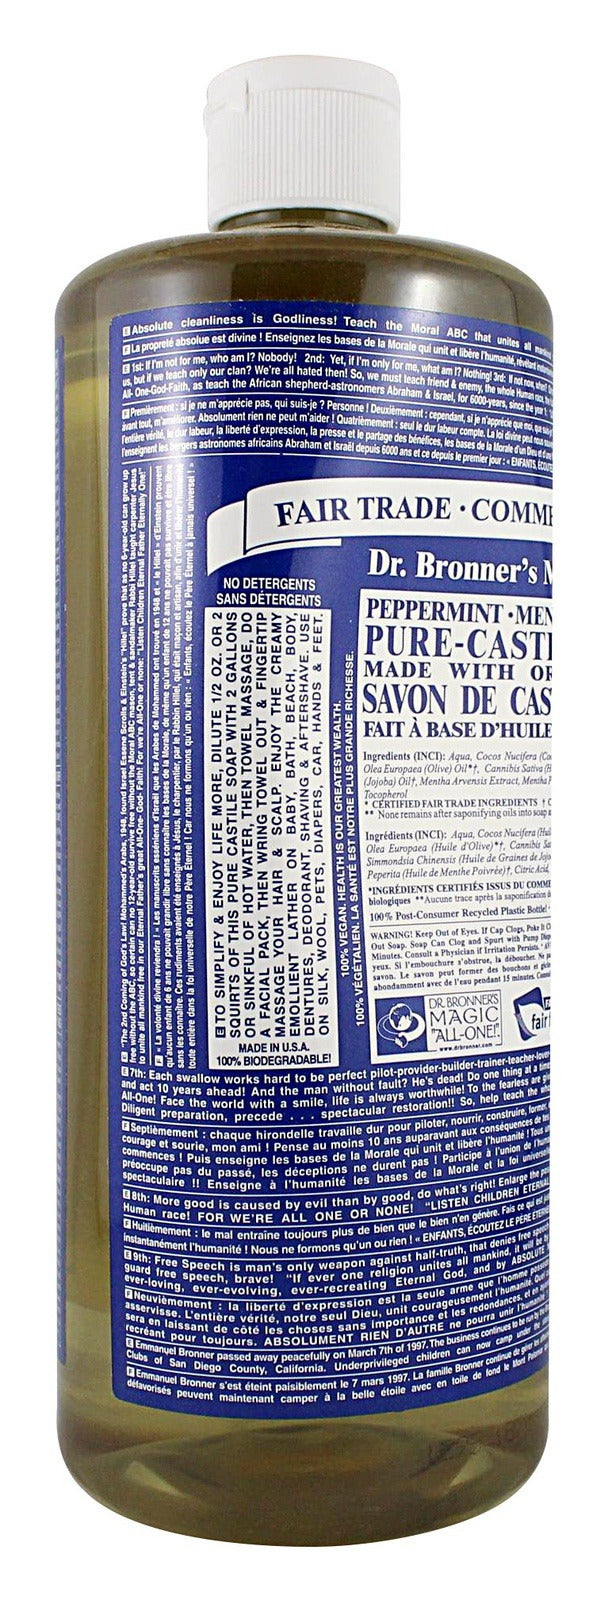 Dr. Bronner's 18-in-1 Pure-Castile Soap - Hemp Peppermint Image 3